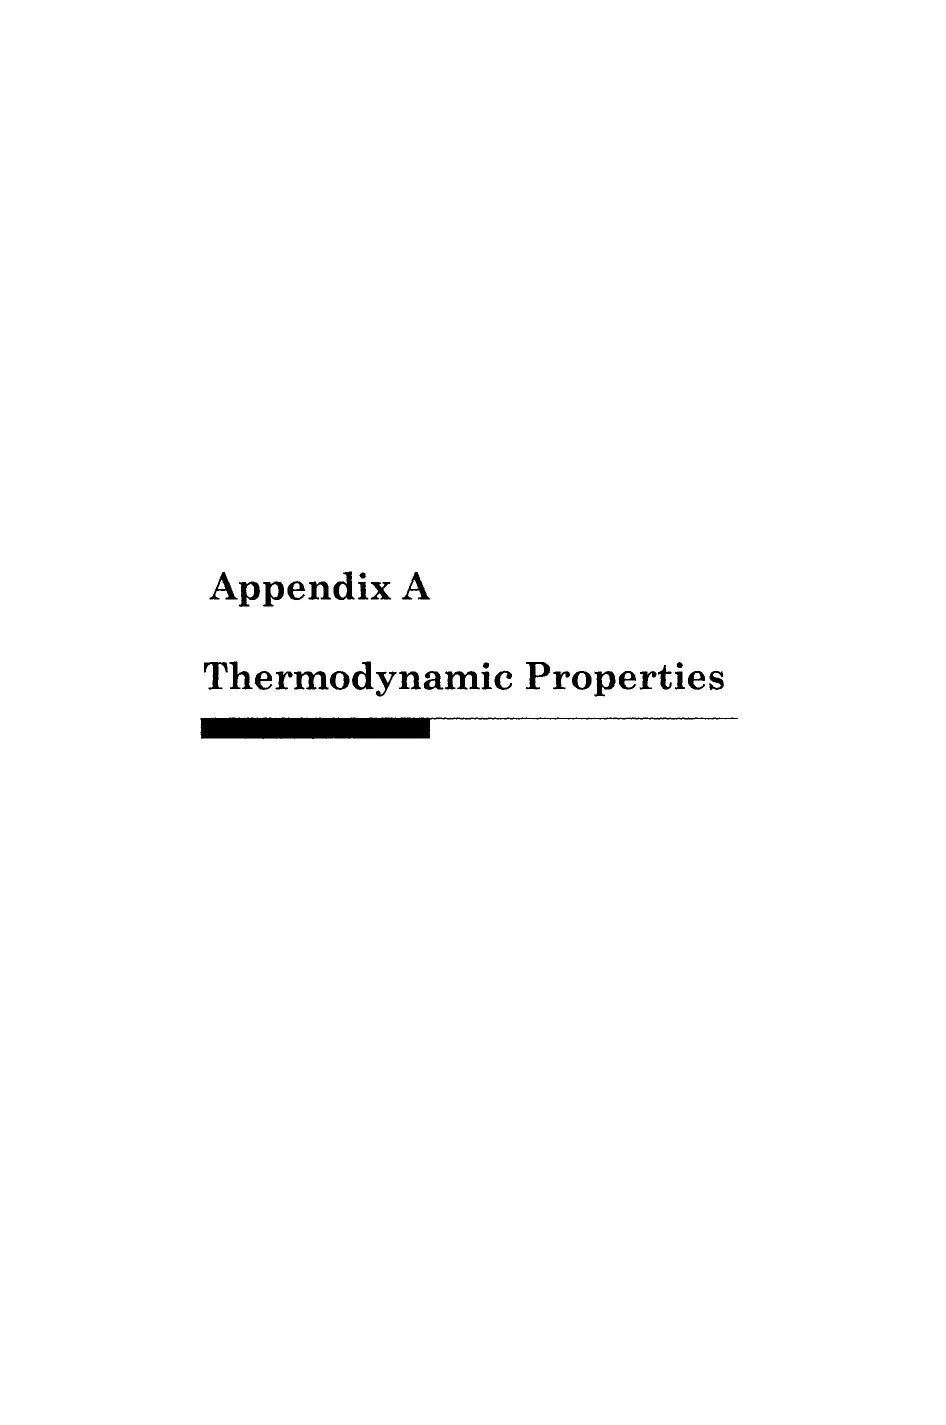 Appendix A - Thermodynamic Properties